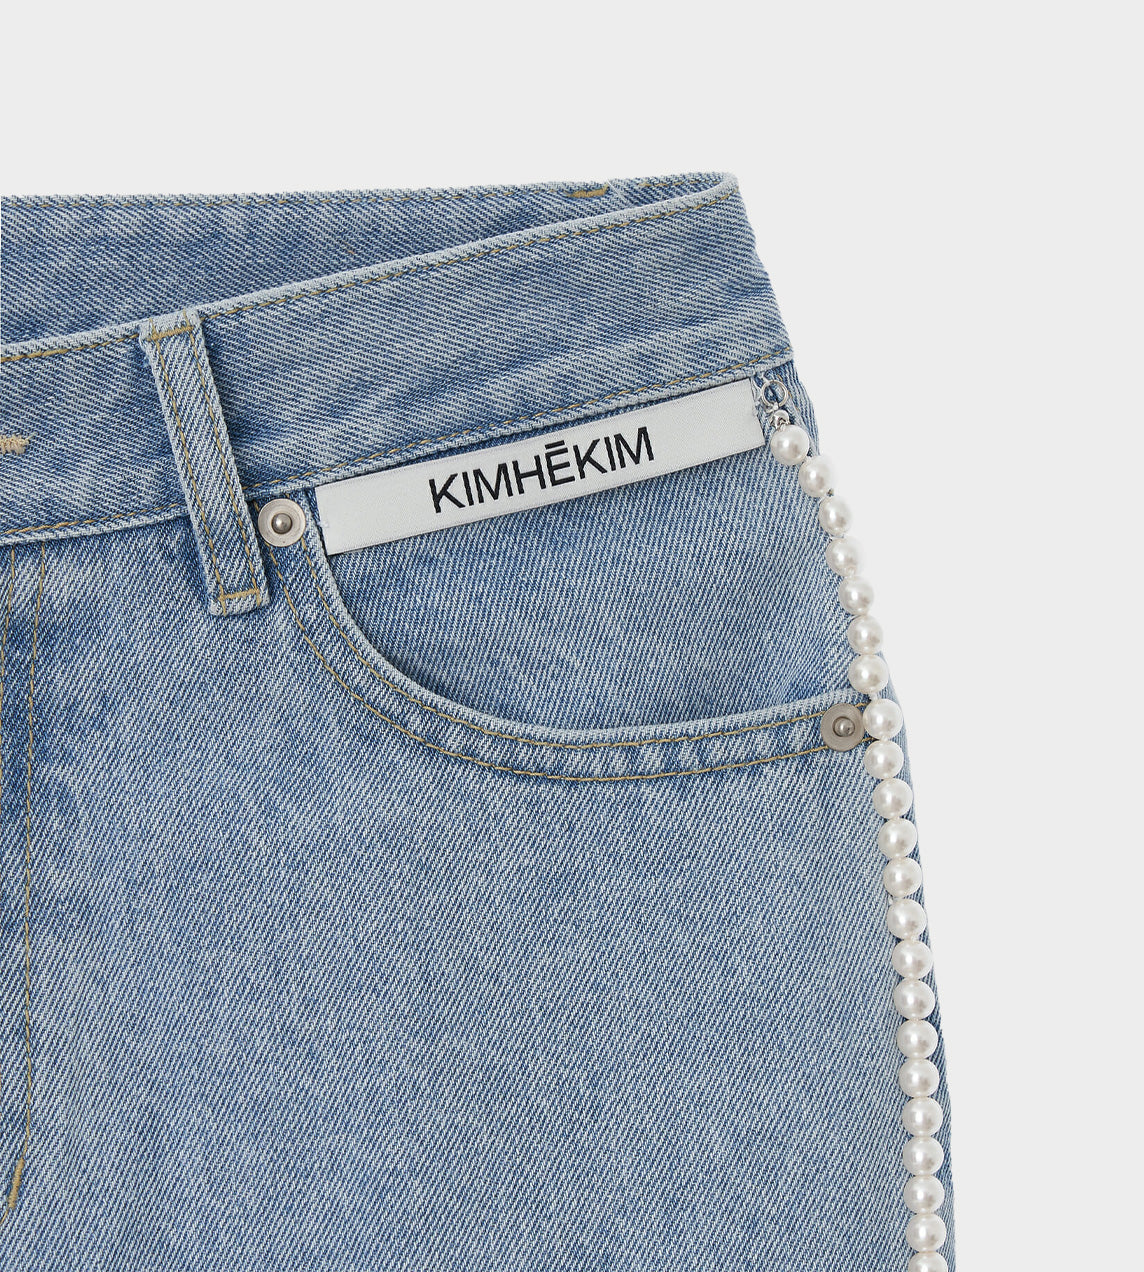 KIMHEKIM - Pearl Strip Wide Leg Jeans